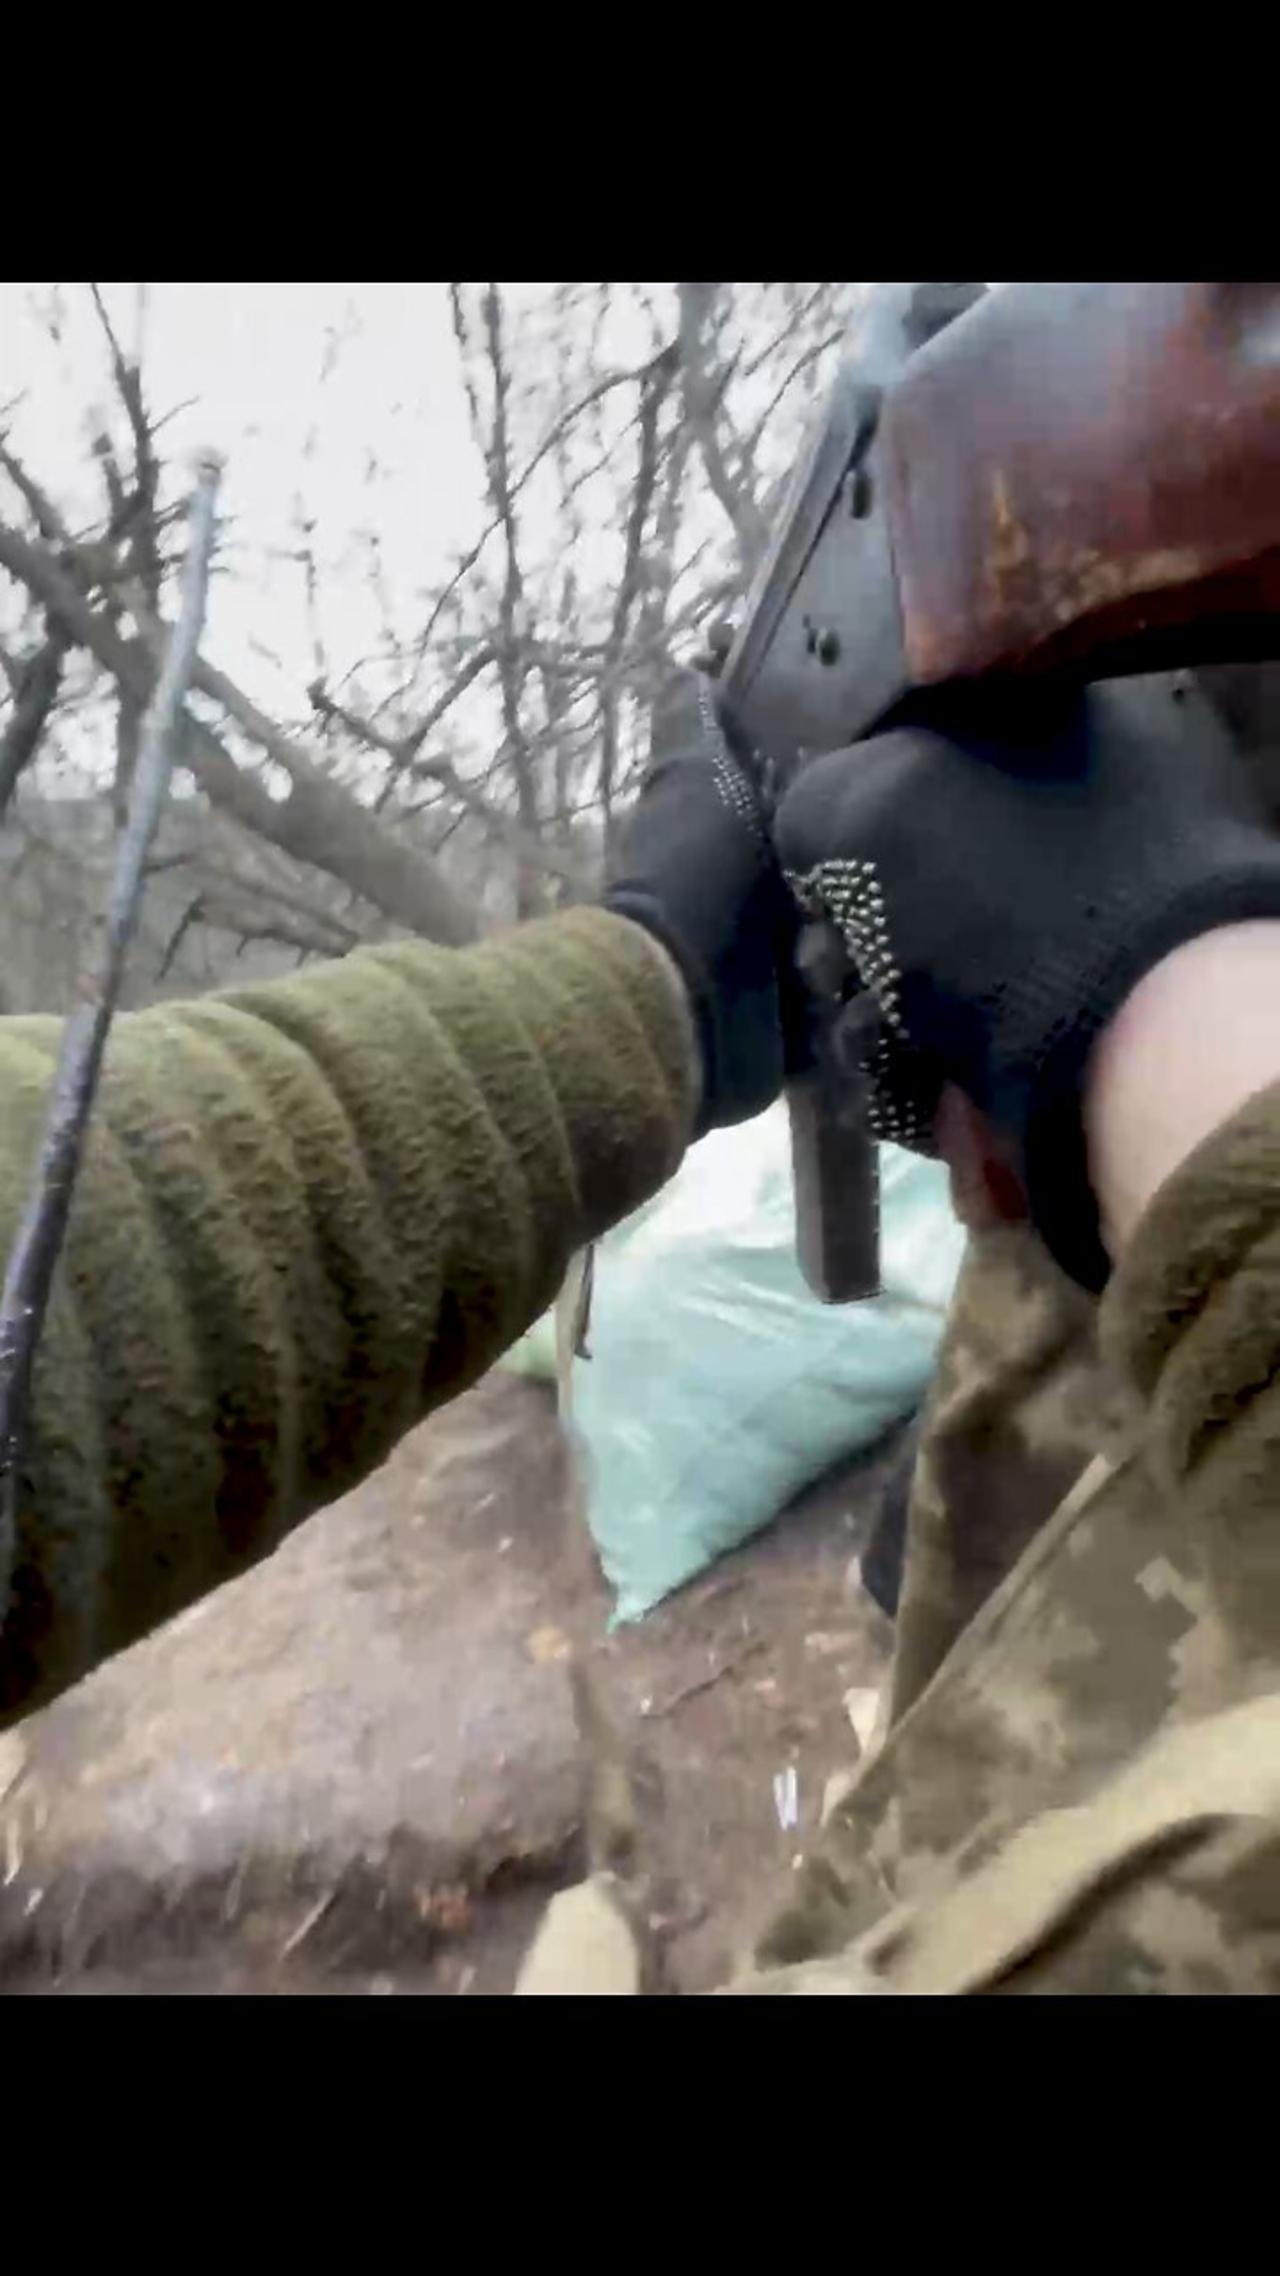 Ukraine war GoPro footage of combat assault on Russian position